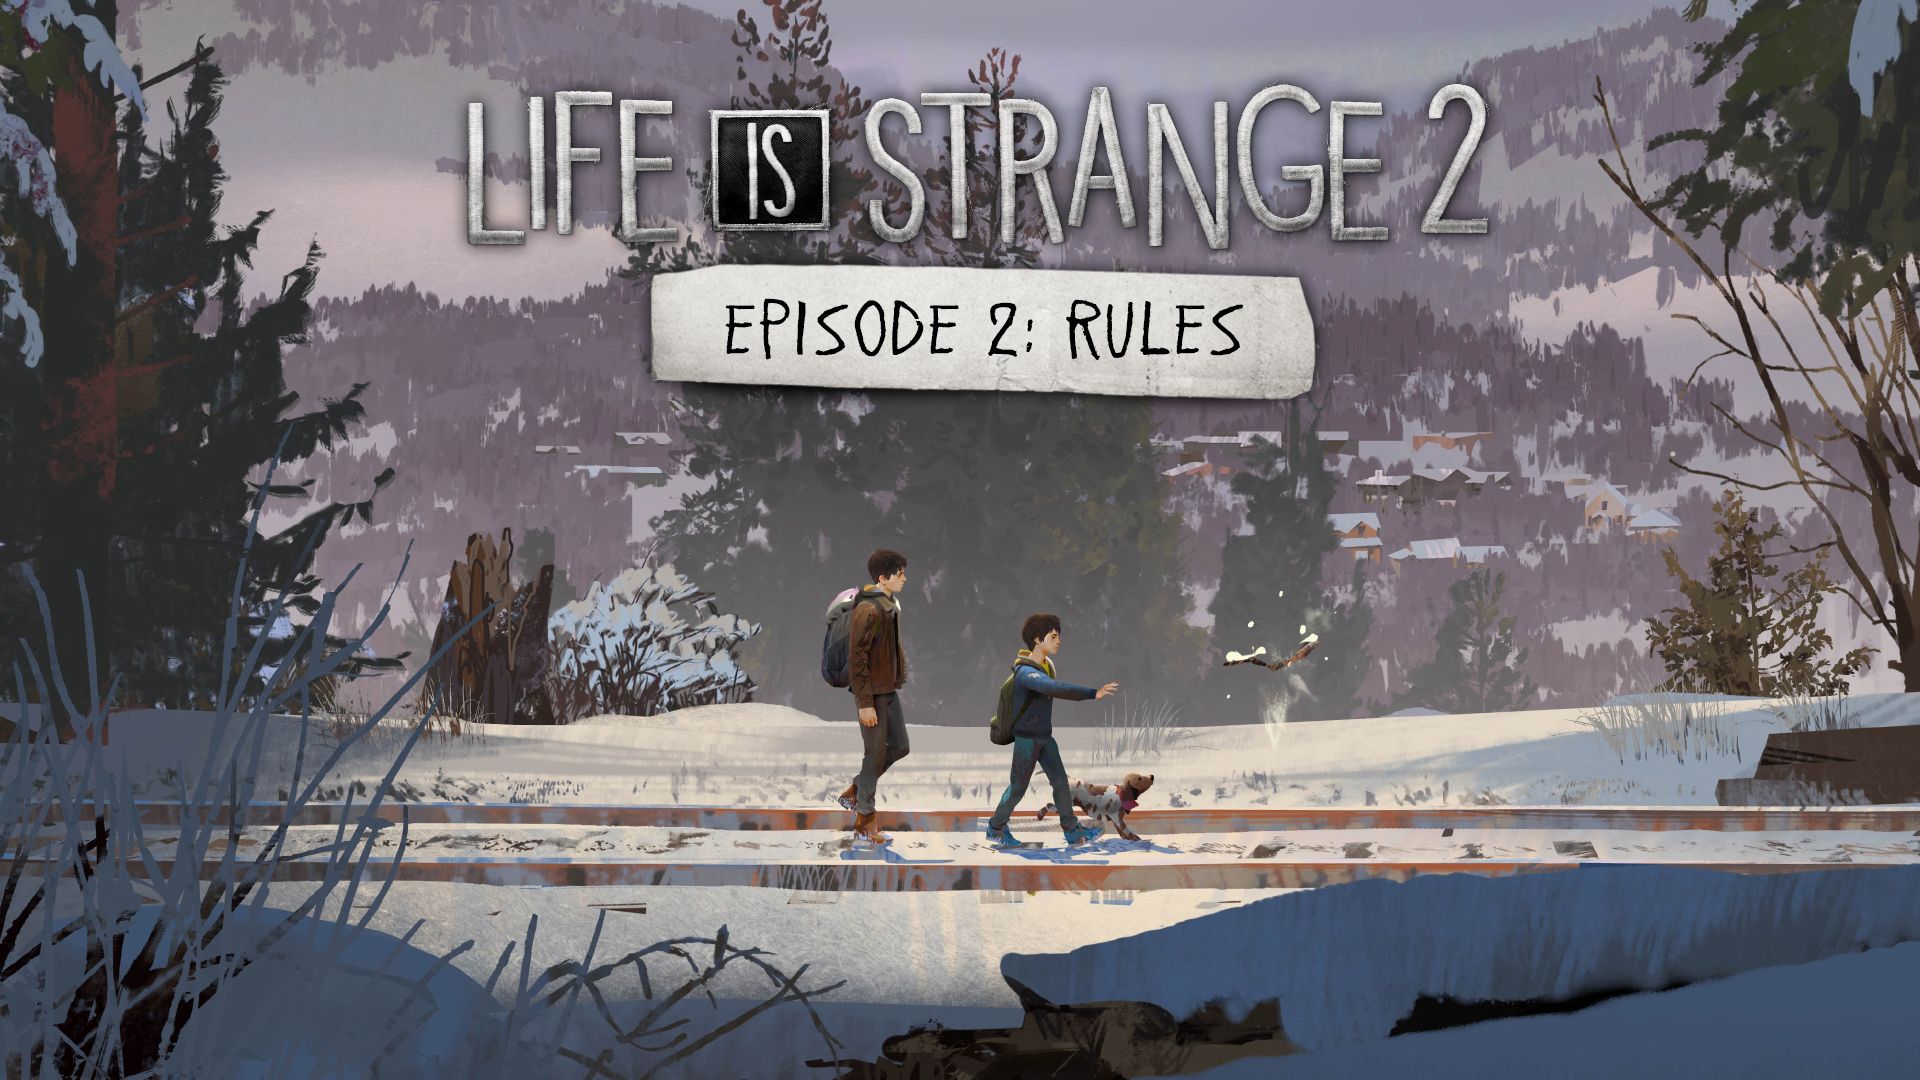 Episode 2. Wallpaper from Life is Strange 2